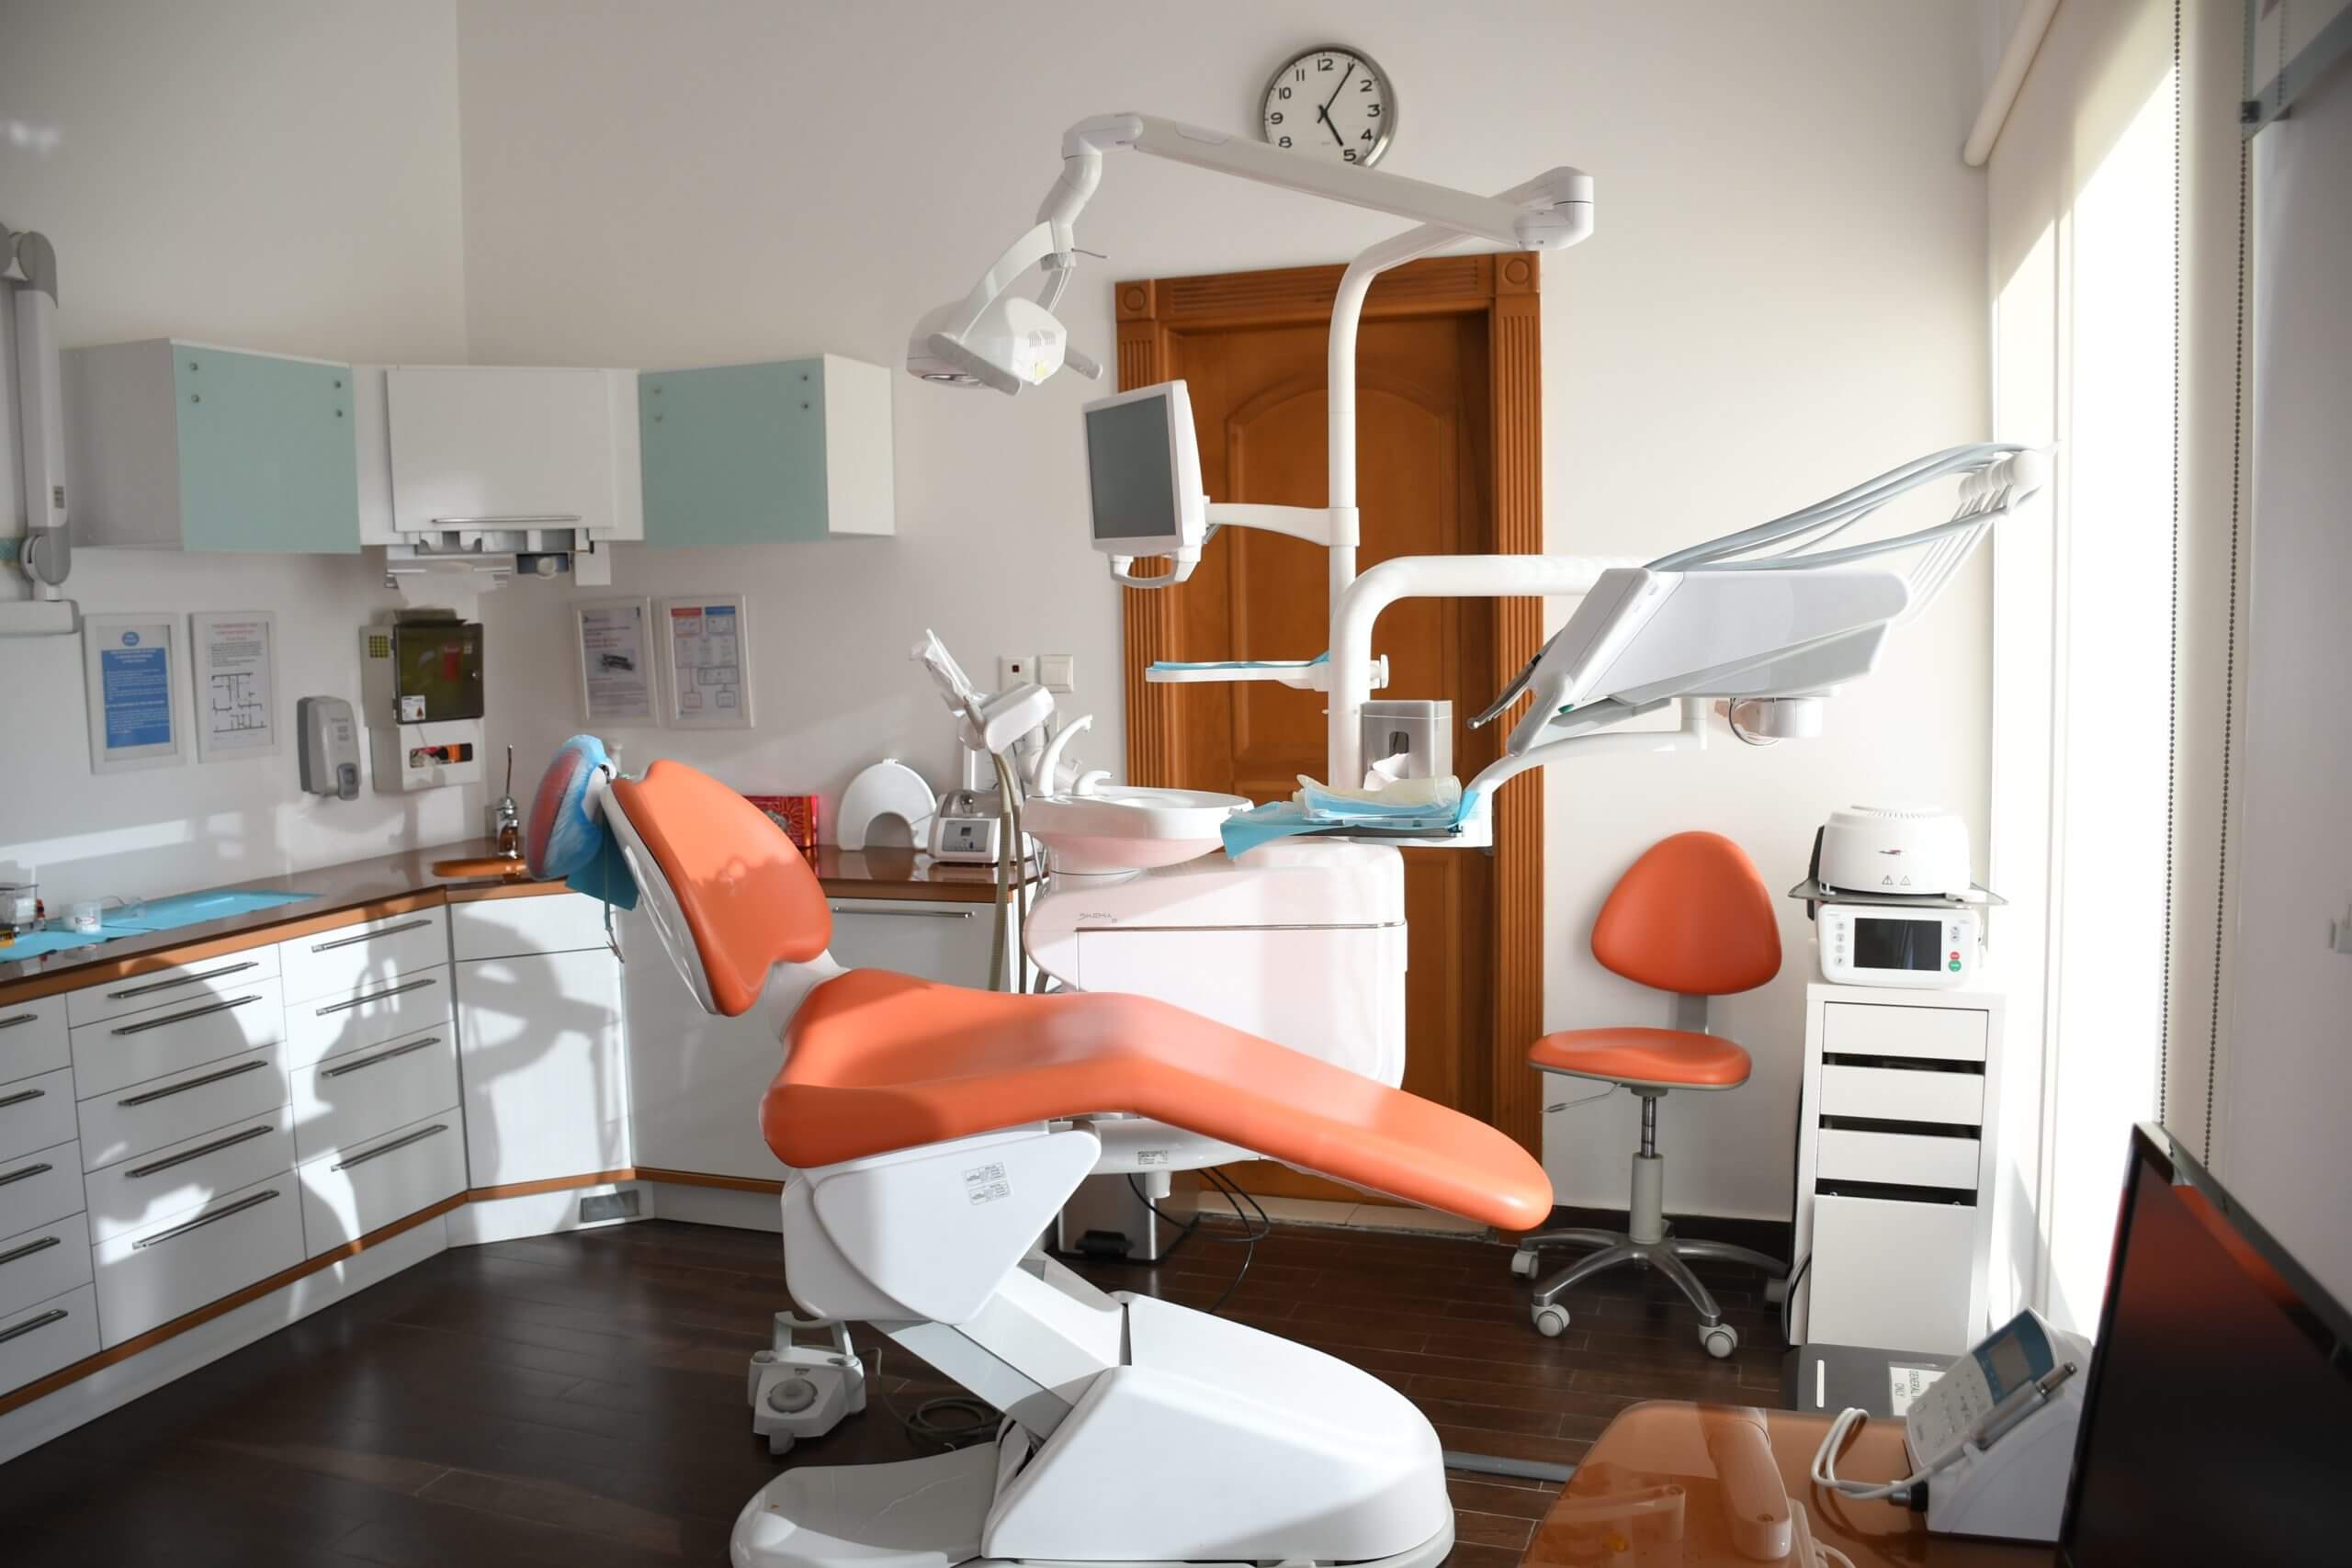 歯科の治療室